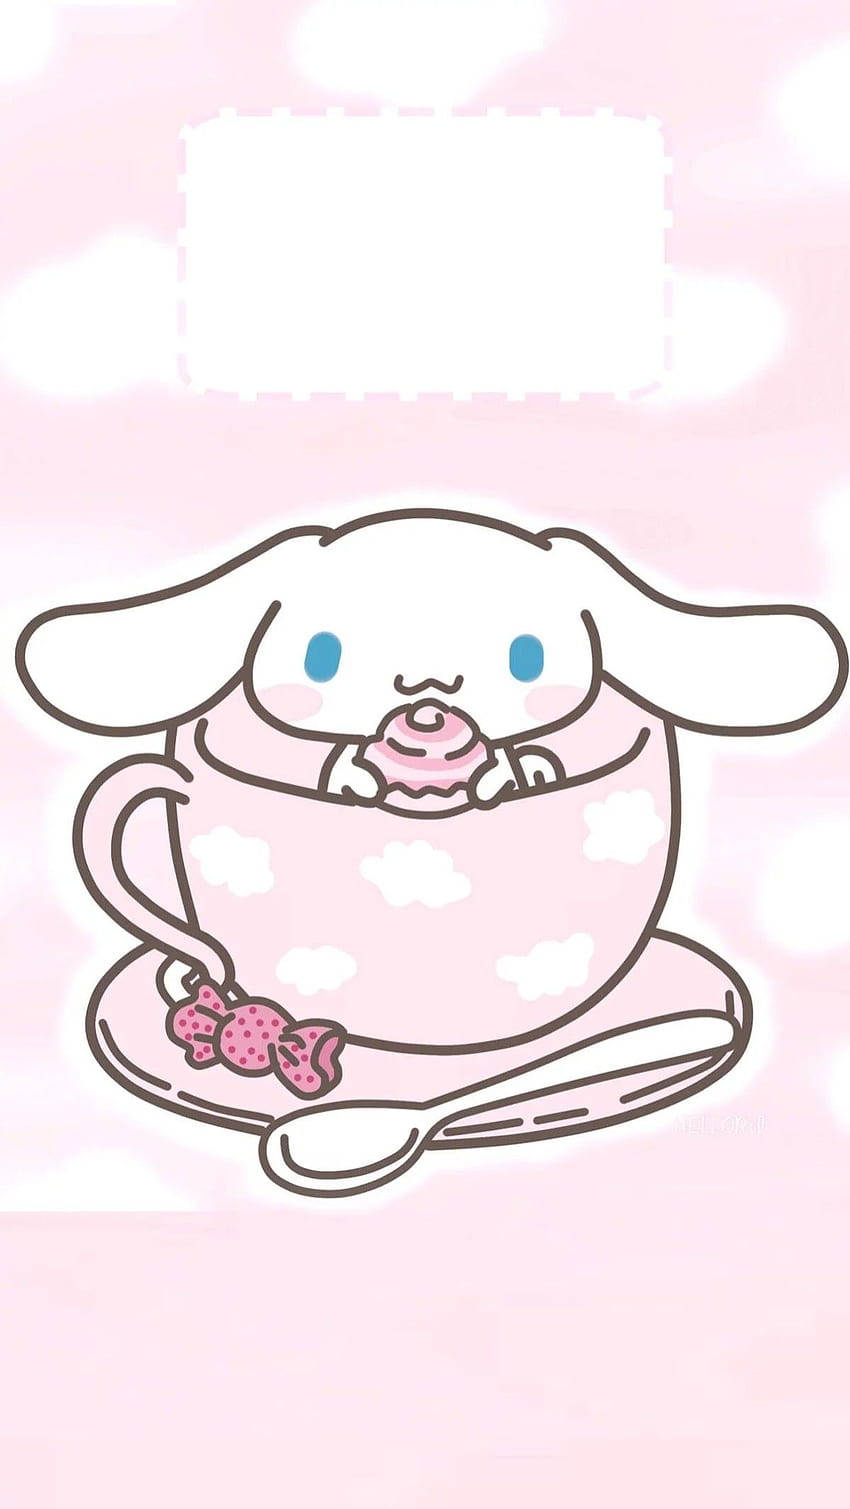 Cute Puppyin Teacup Illustration Wallpaper